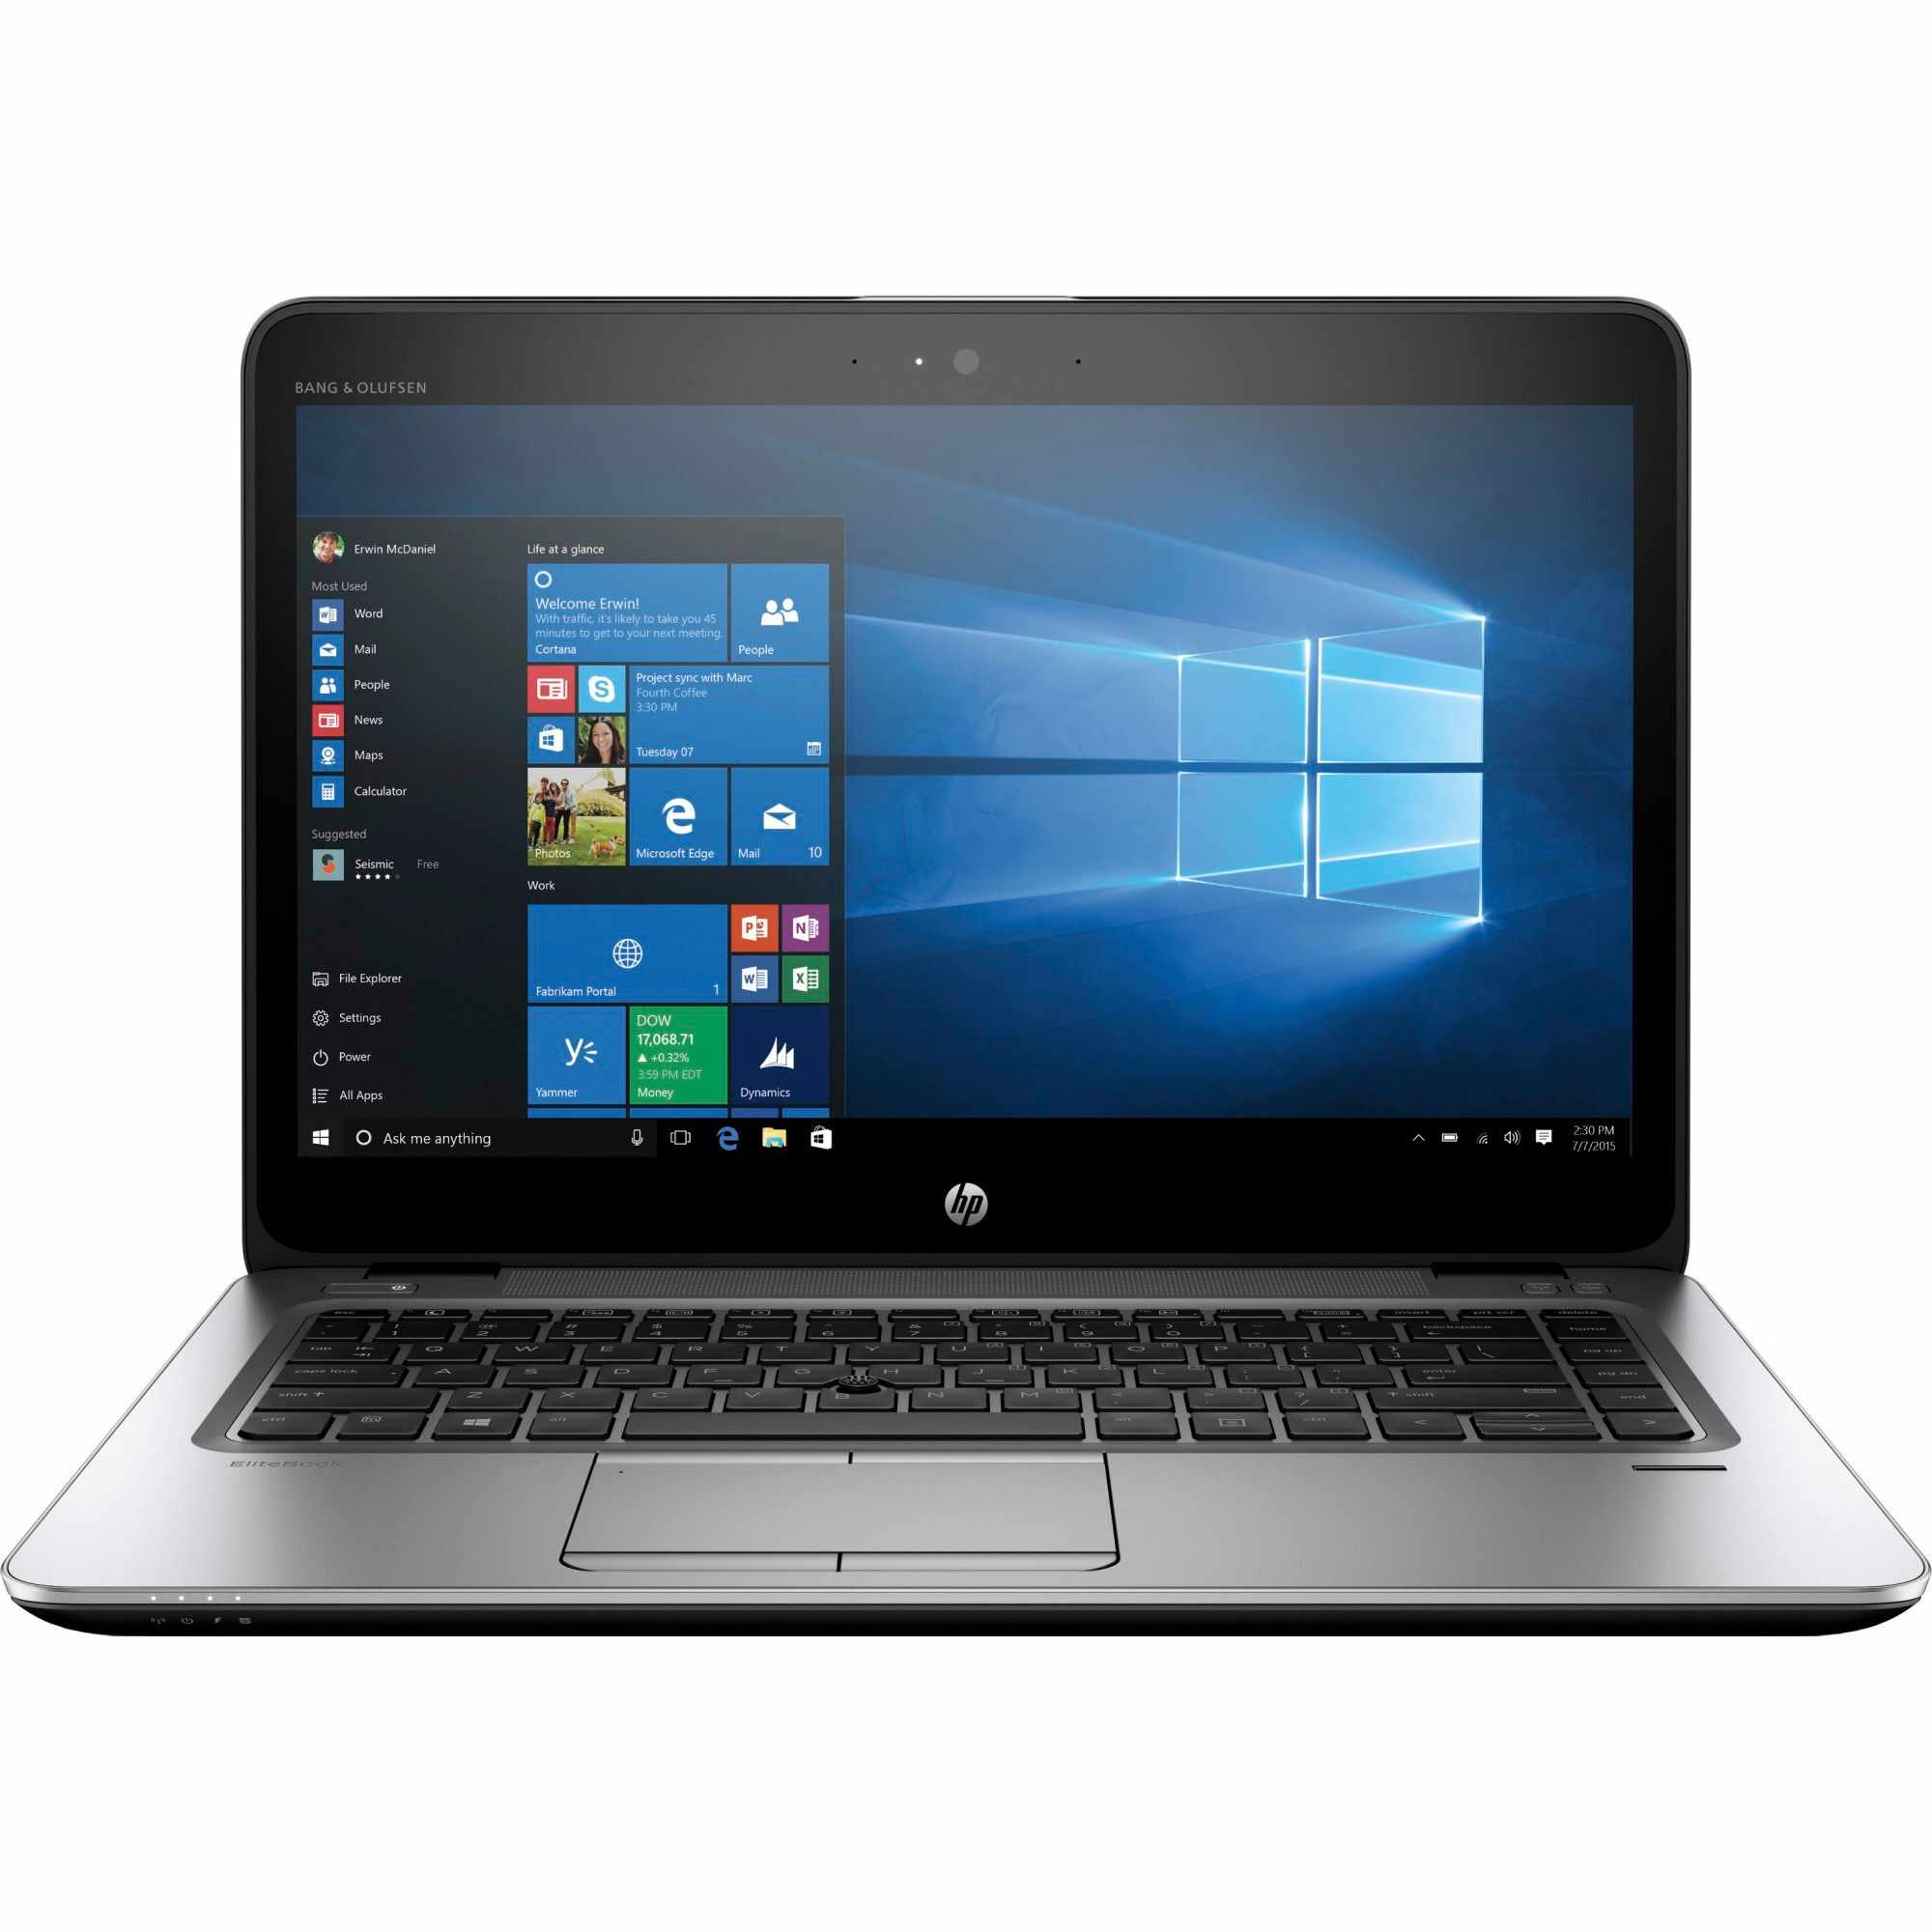 Laptop Second Hand HP EliteBook 840 G5, Intel Core i5-7300U 2.60GHz, 8GB DDR4, 256GB SSD, 14 Inch Full HD, Webcam